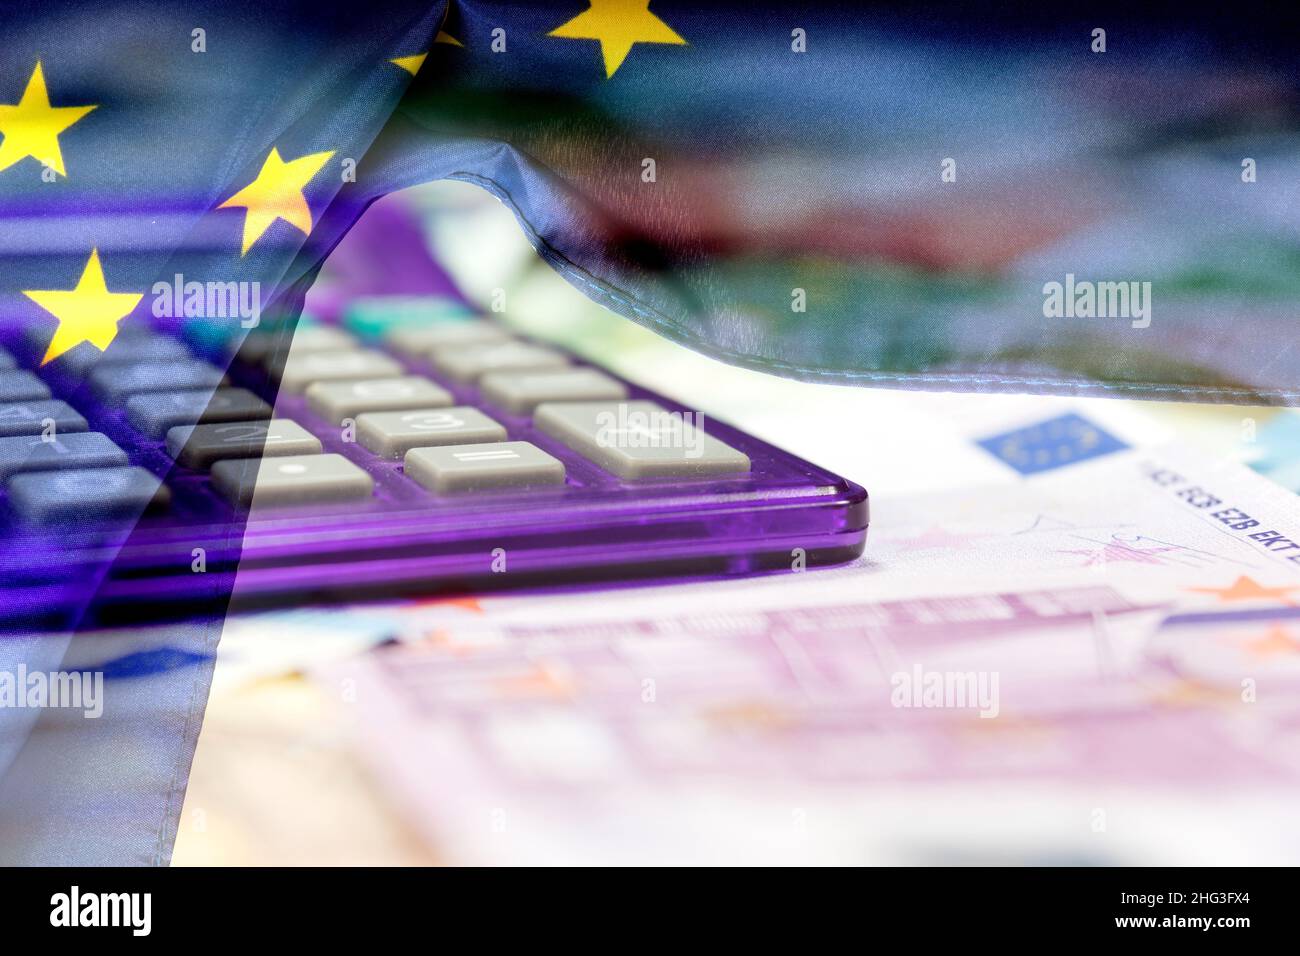 European Union flag, euro banknotes and a calculator Stock Photo